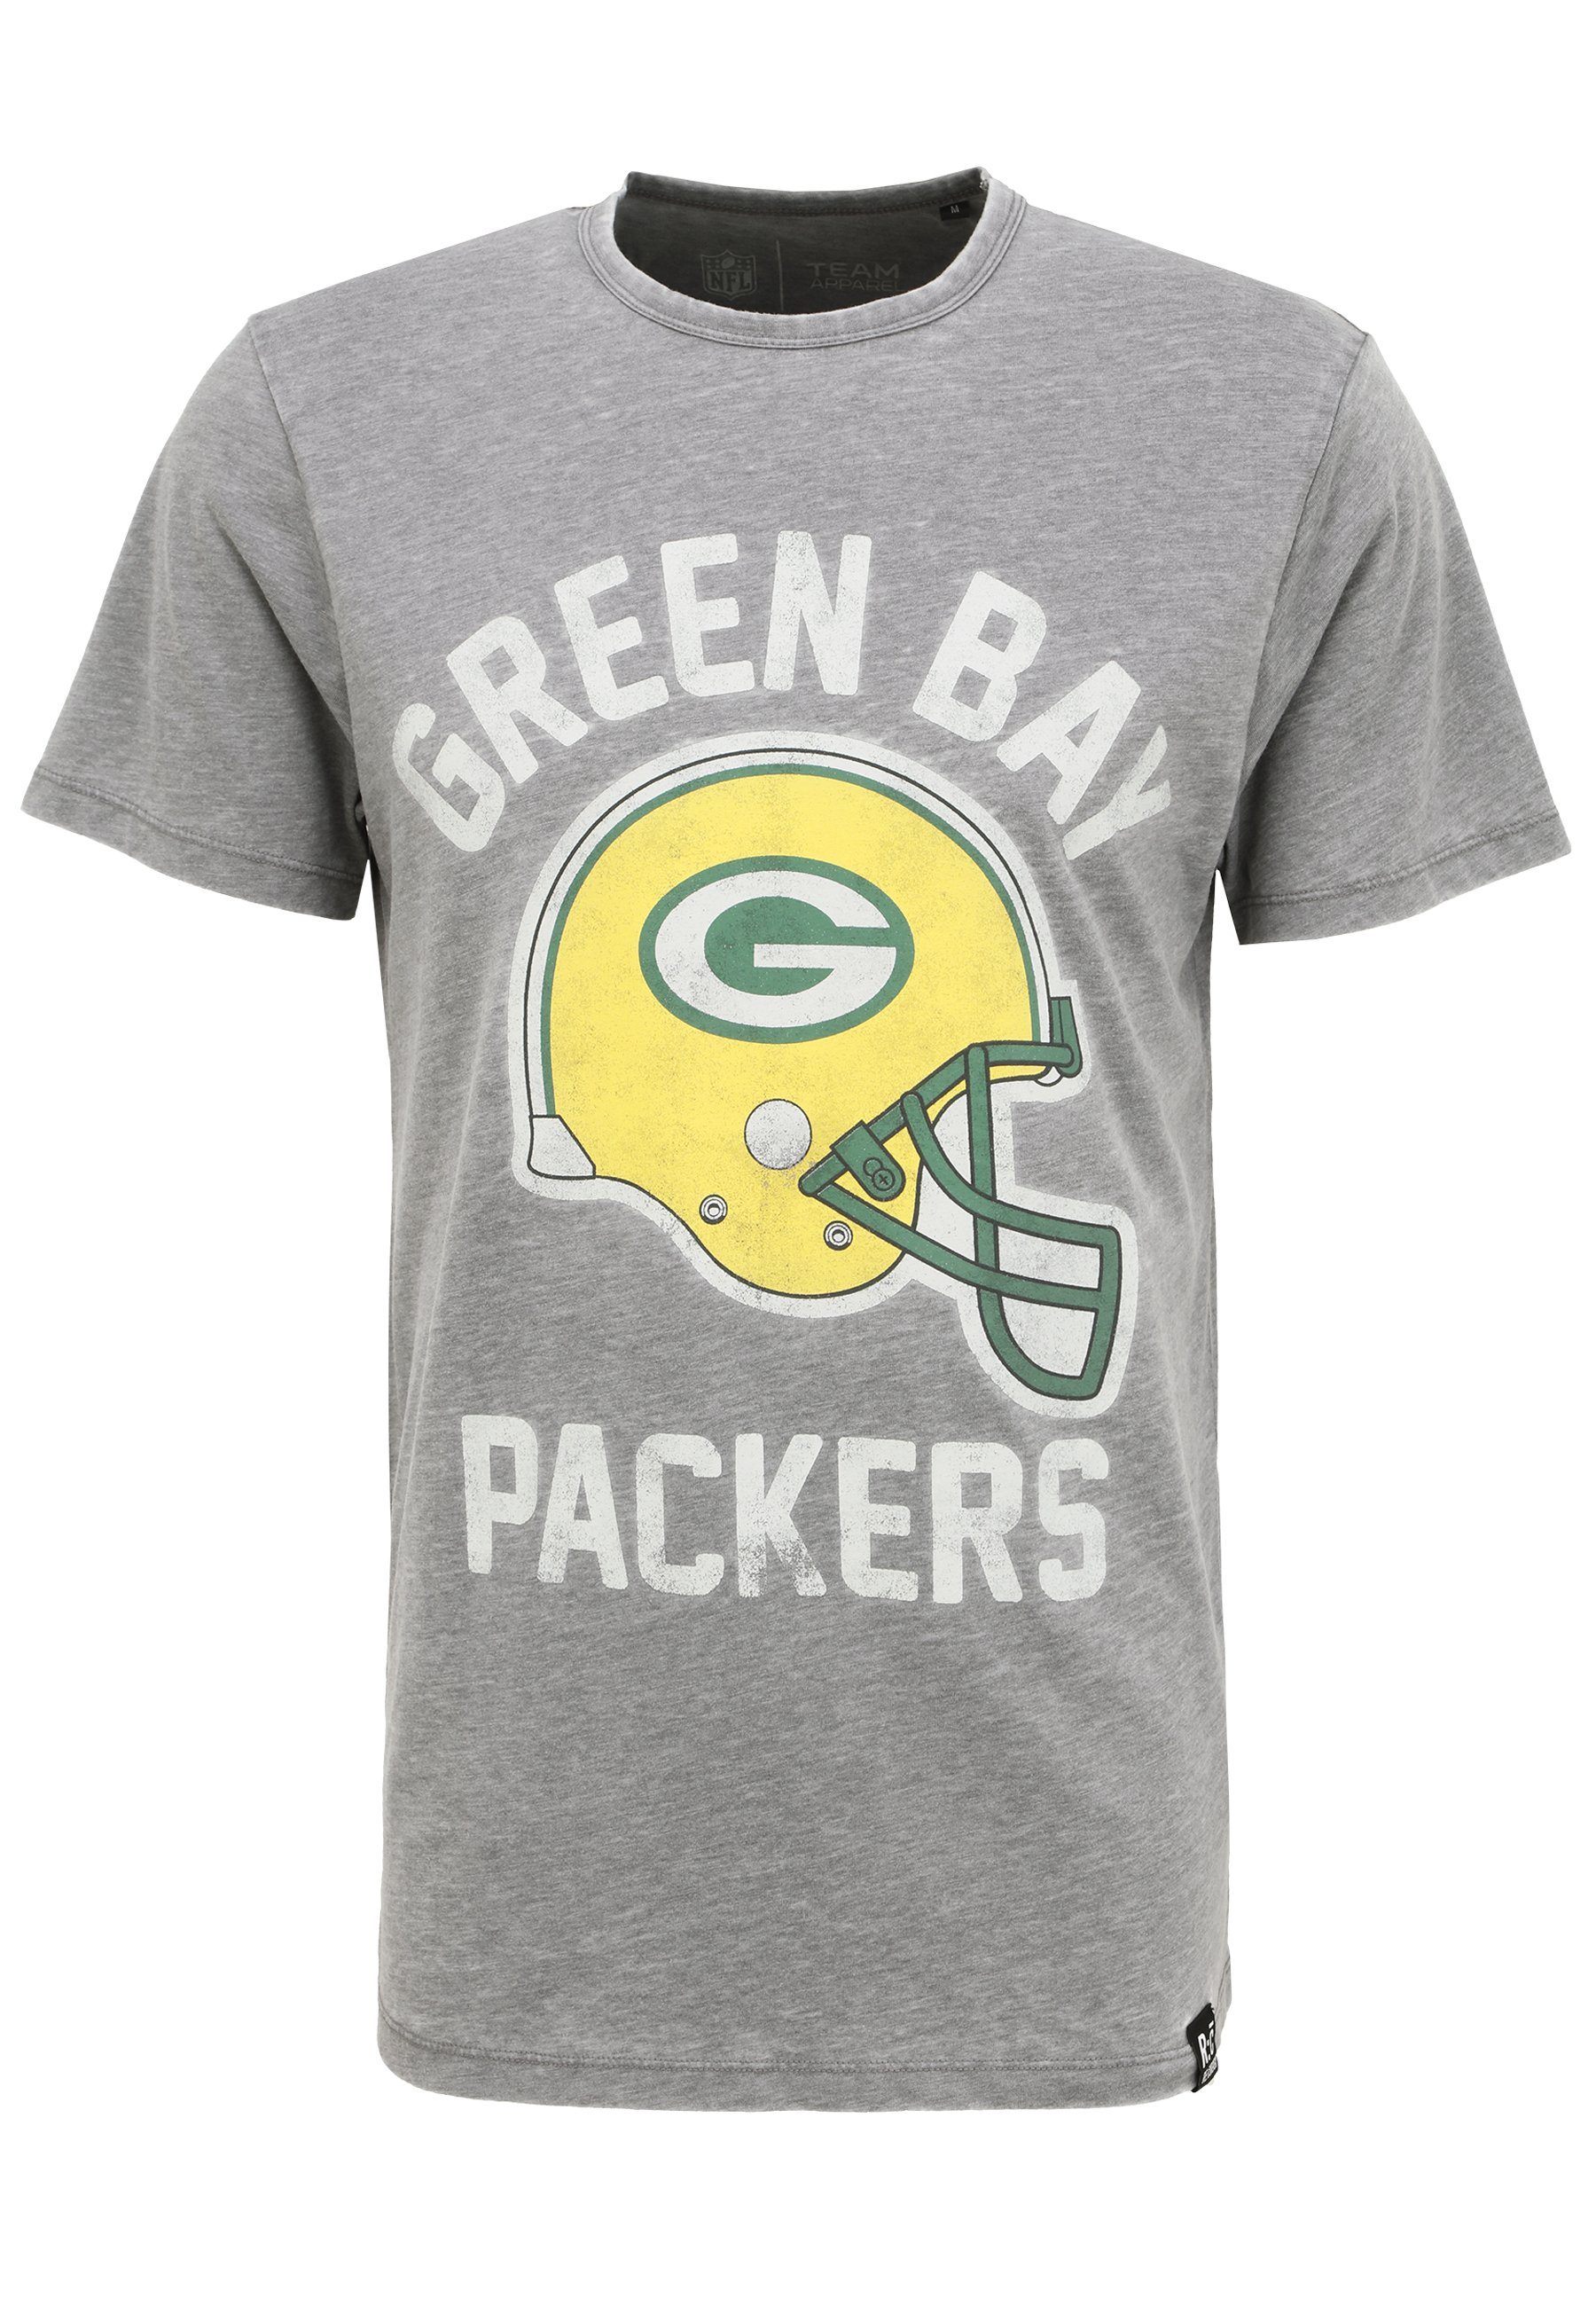 Print T-Shirt Grau NFL Helmet Recovered